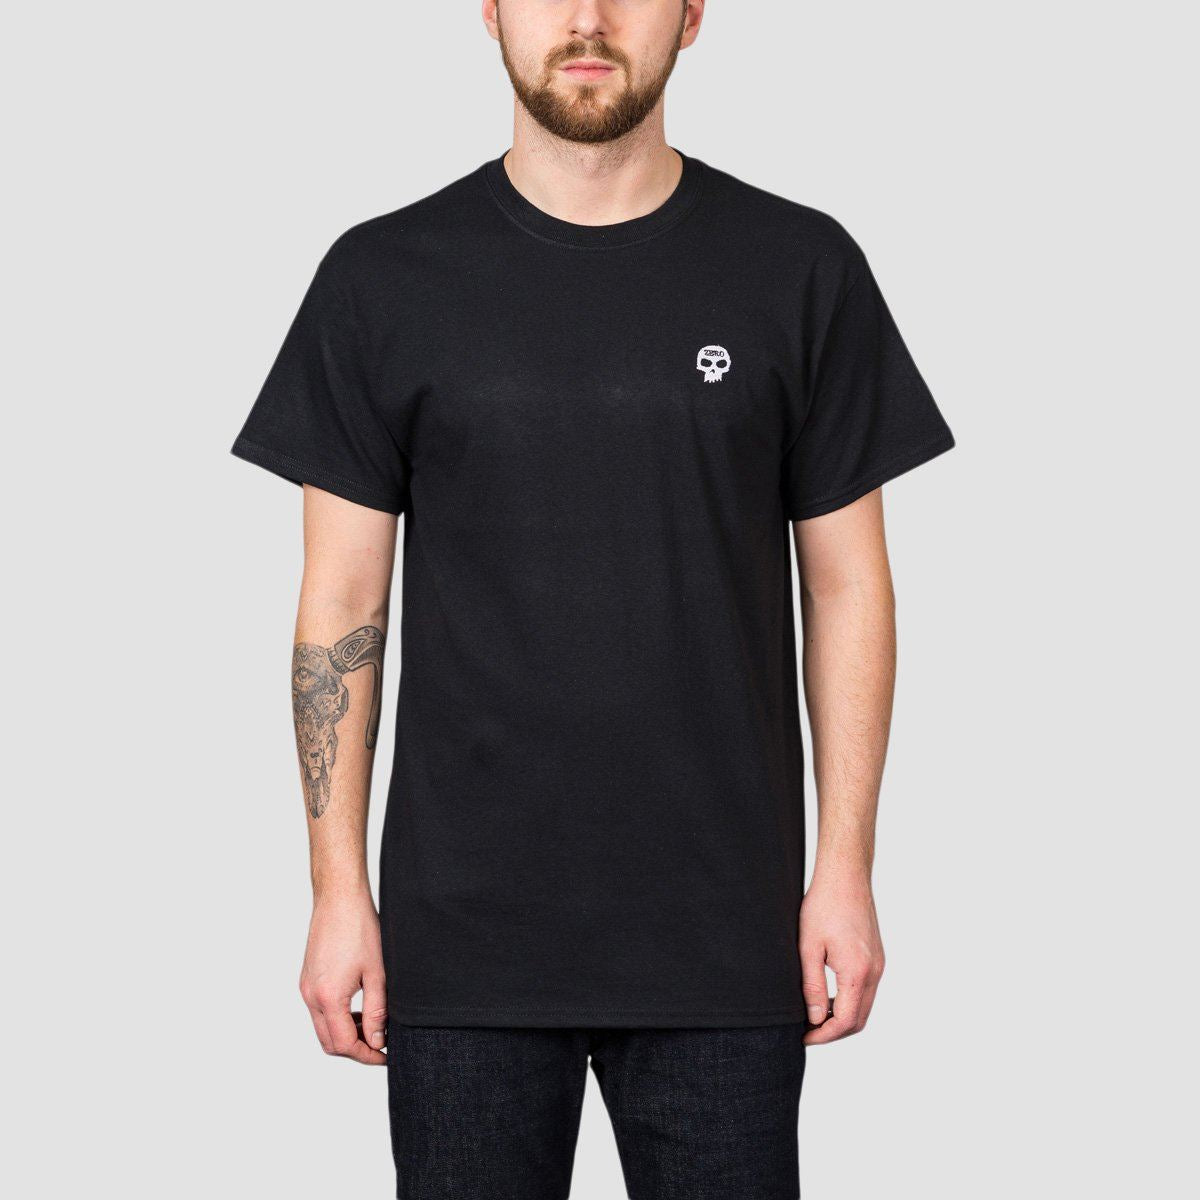 Zero Single Skull Embroidered T-Shirt Black